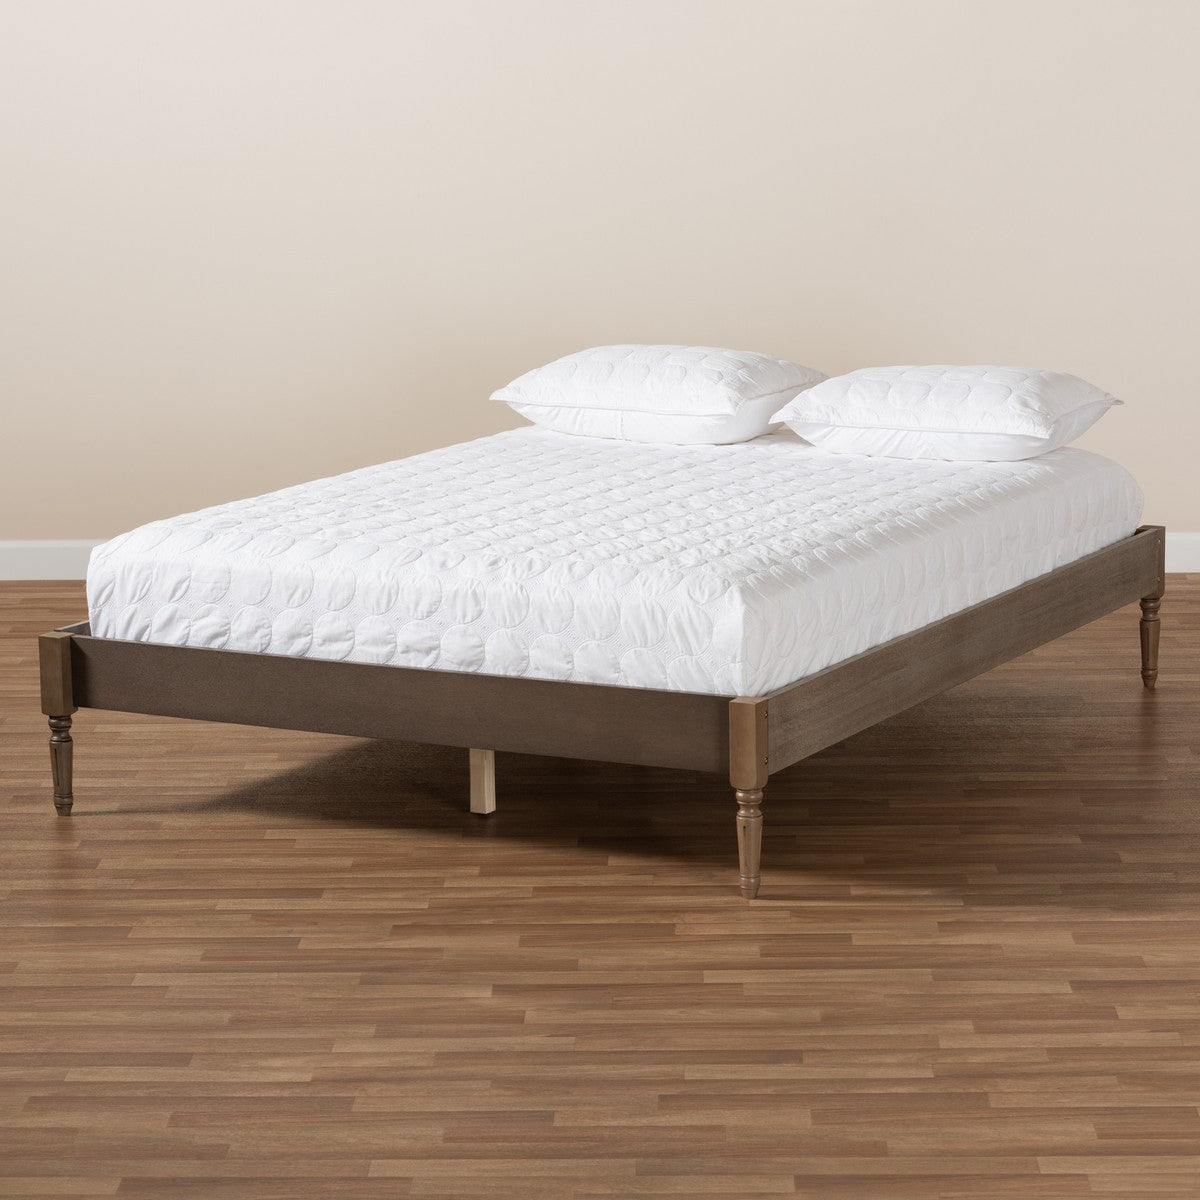 Baxton Studio Colette French Bohemian Weathered Grey Oak Finished Wood Full Size Platform Bed Frame